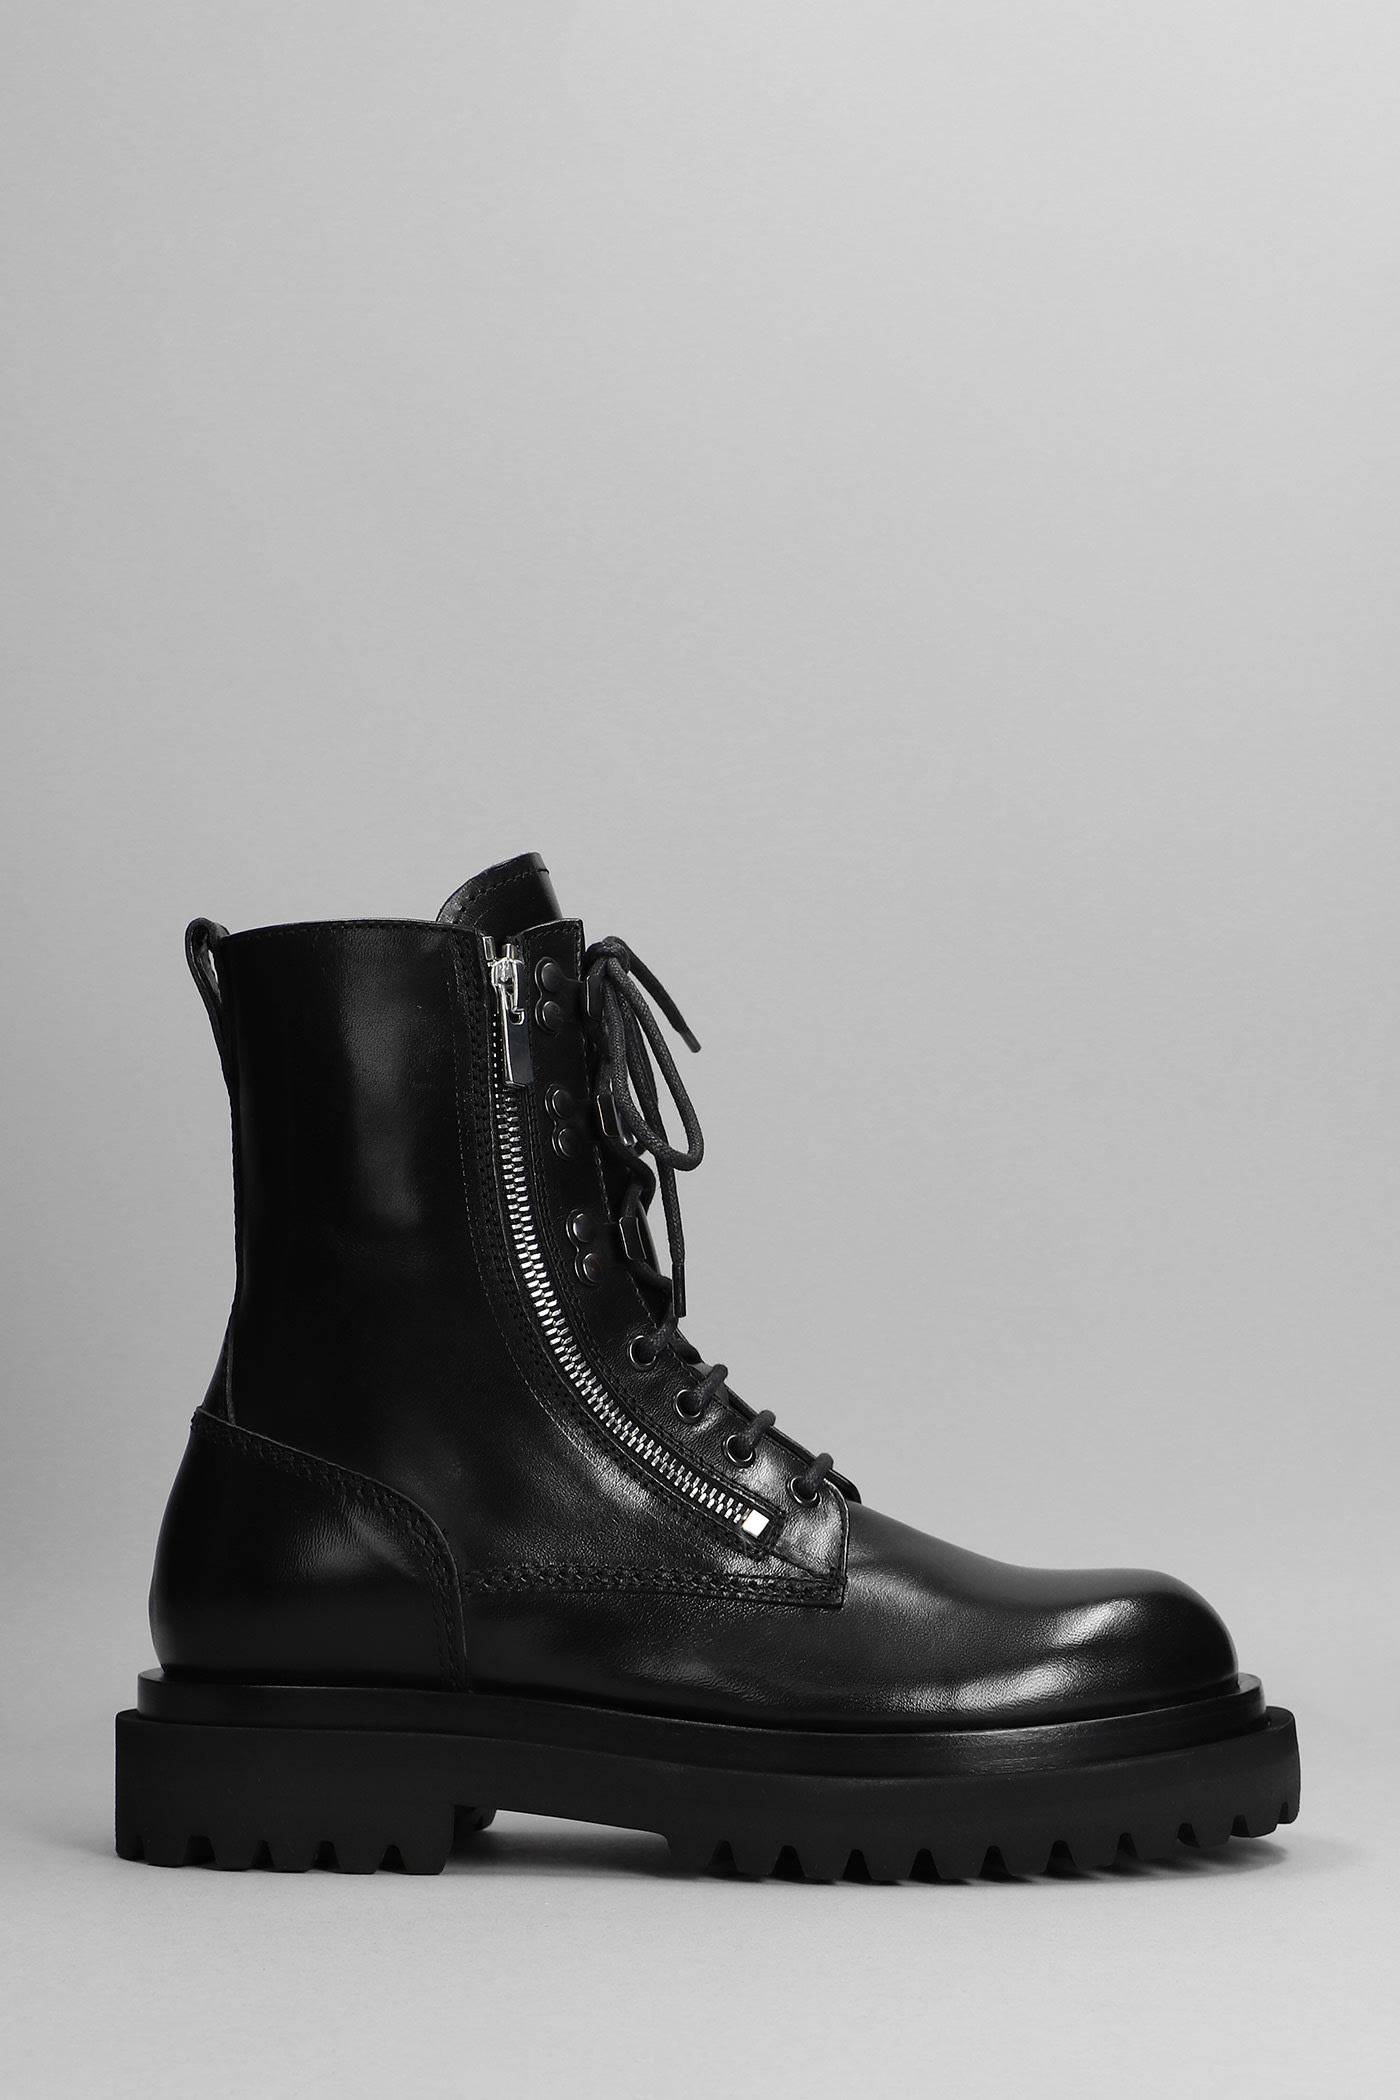 Officine Creative Ultimatt 003 Combat Boots In Black Leather